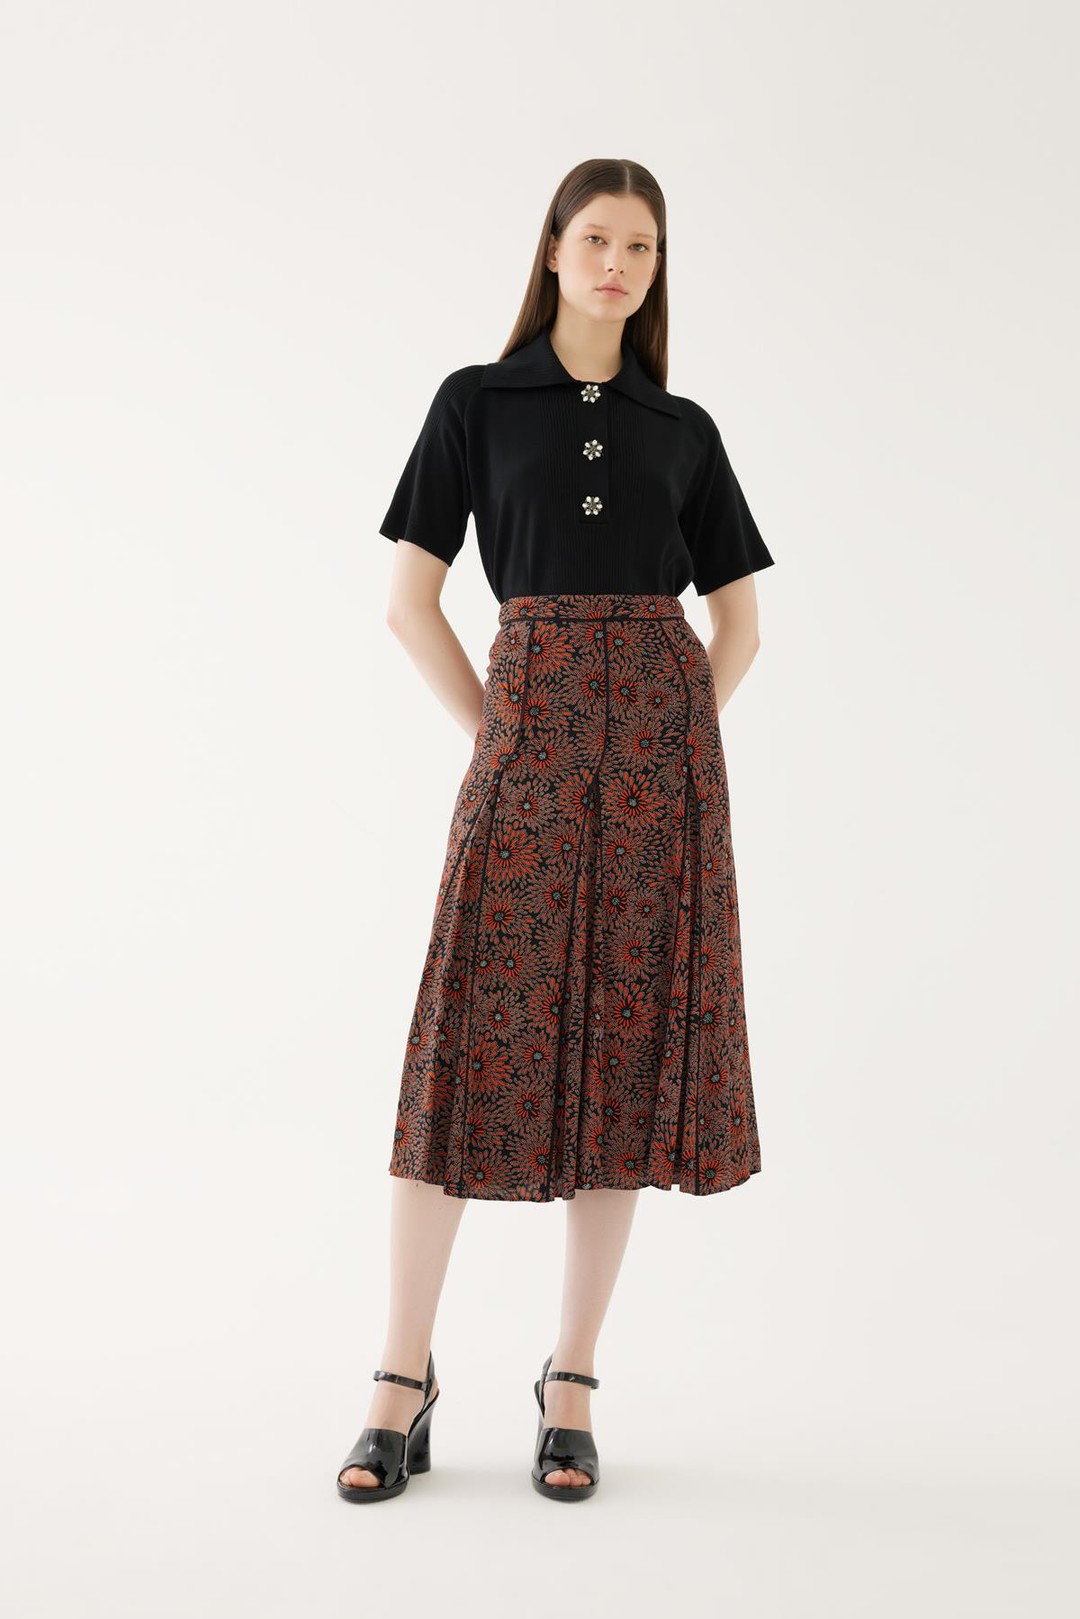 Floral Patterned Segmented Skirt 1